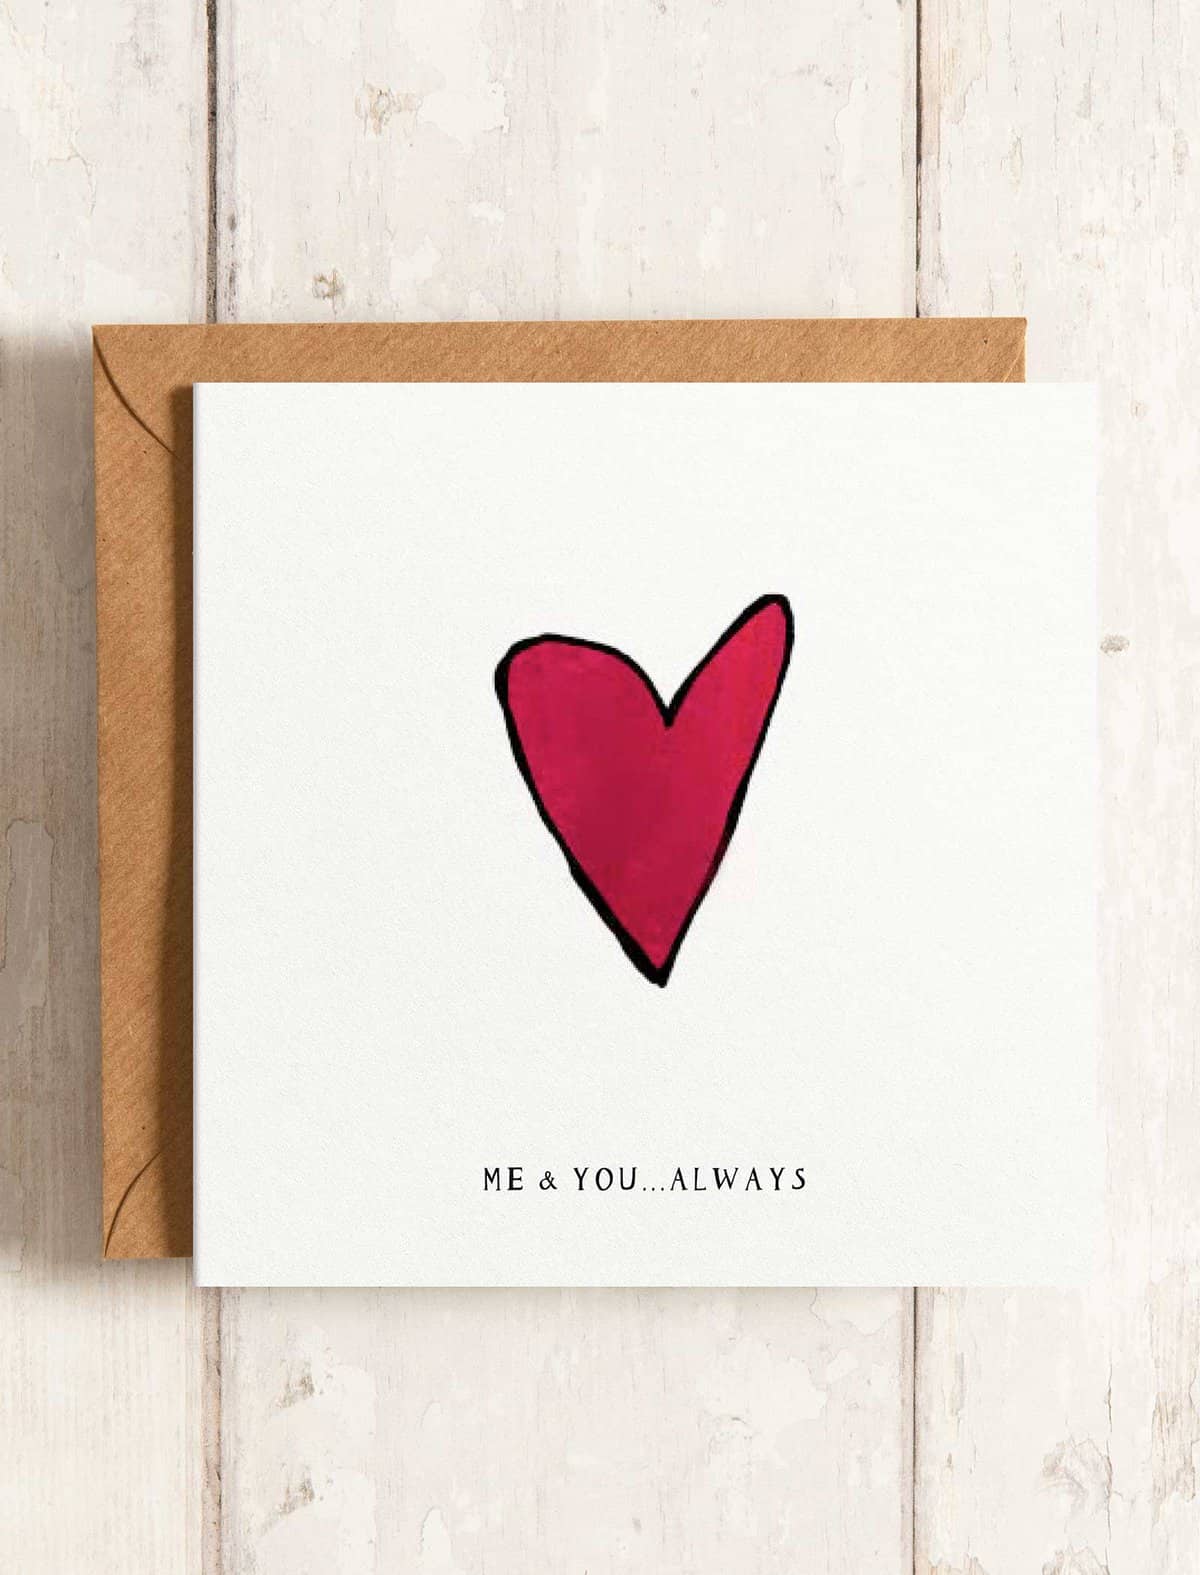 Love heart card by katie cardew